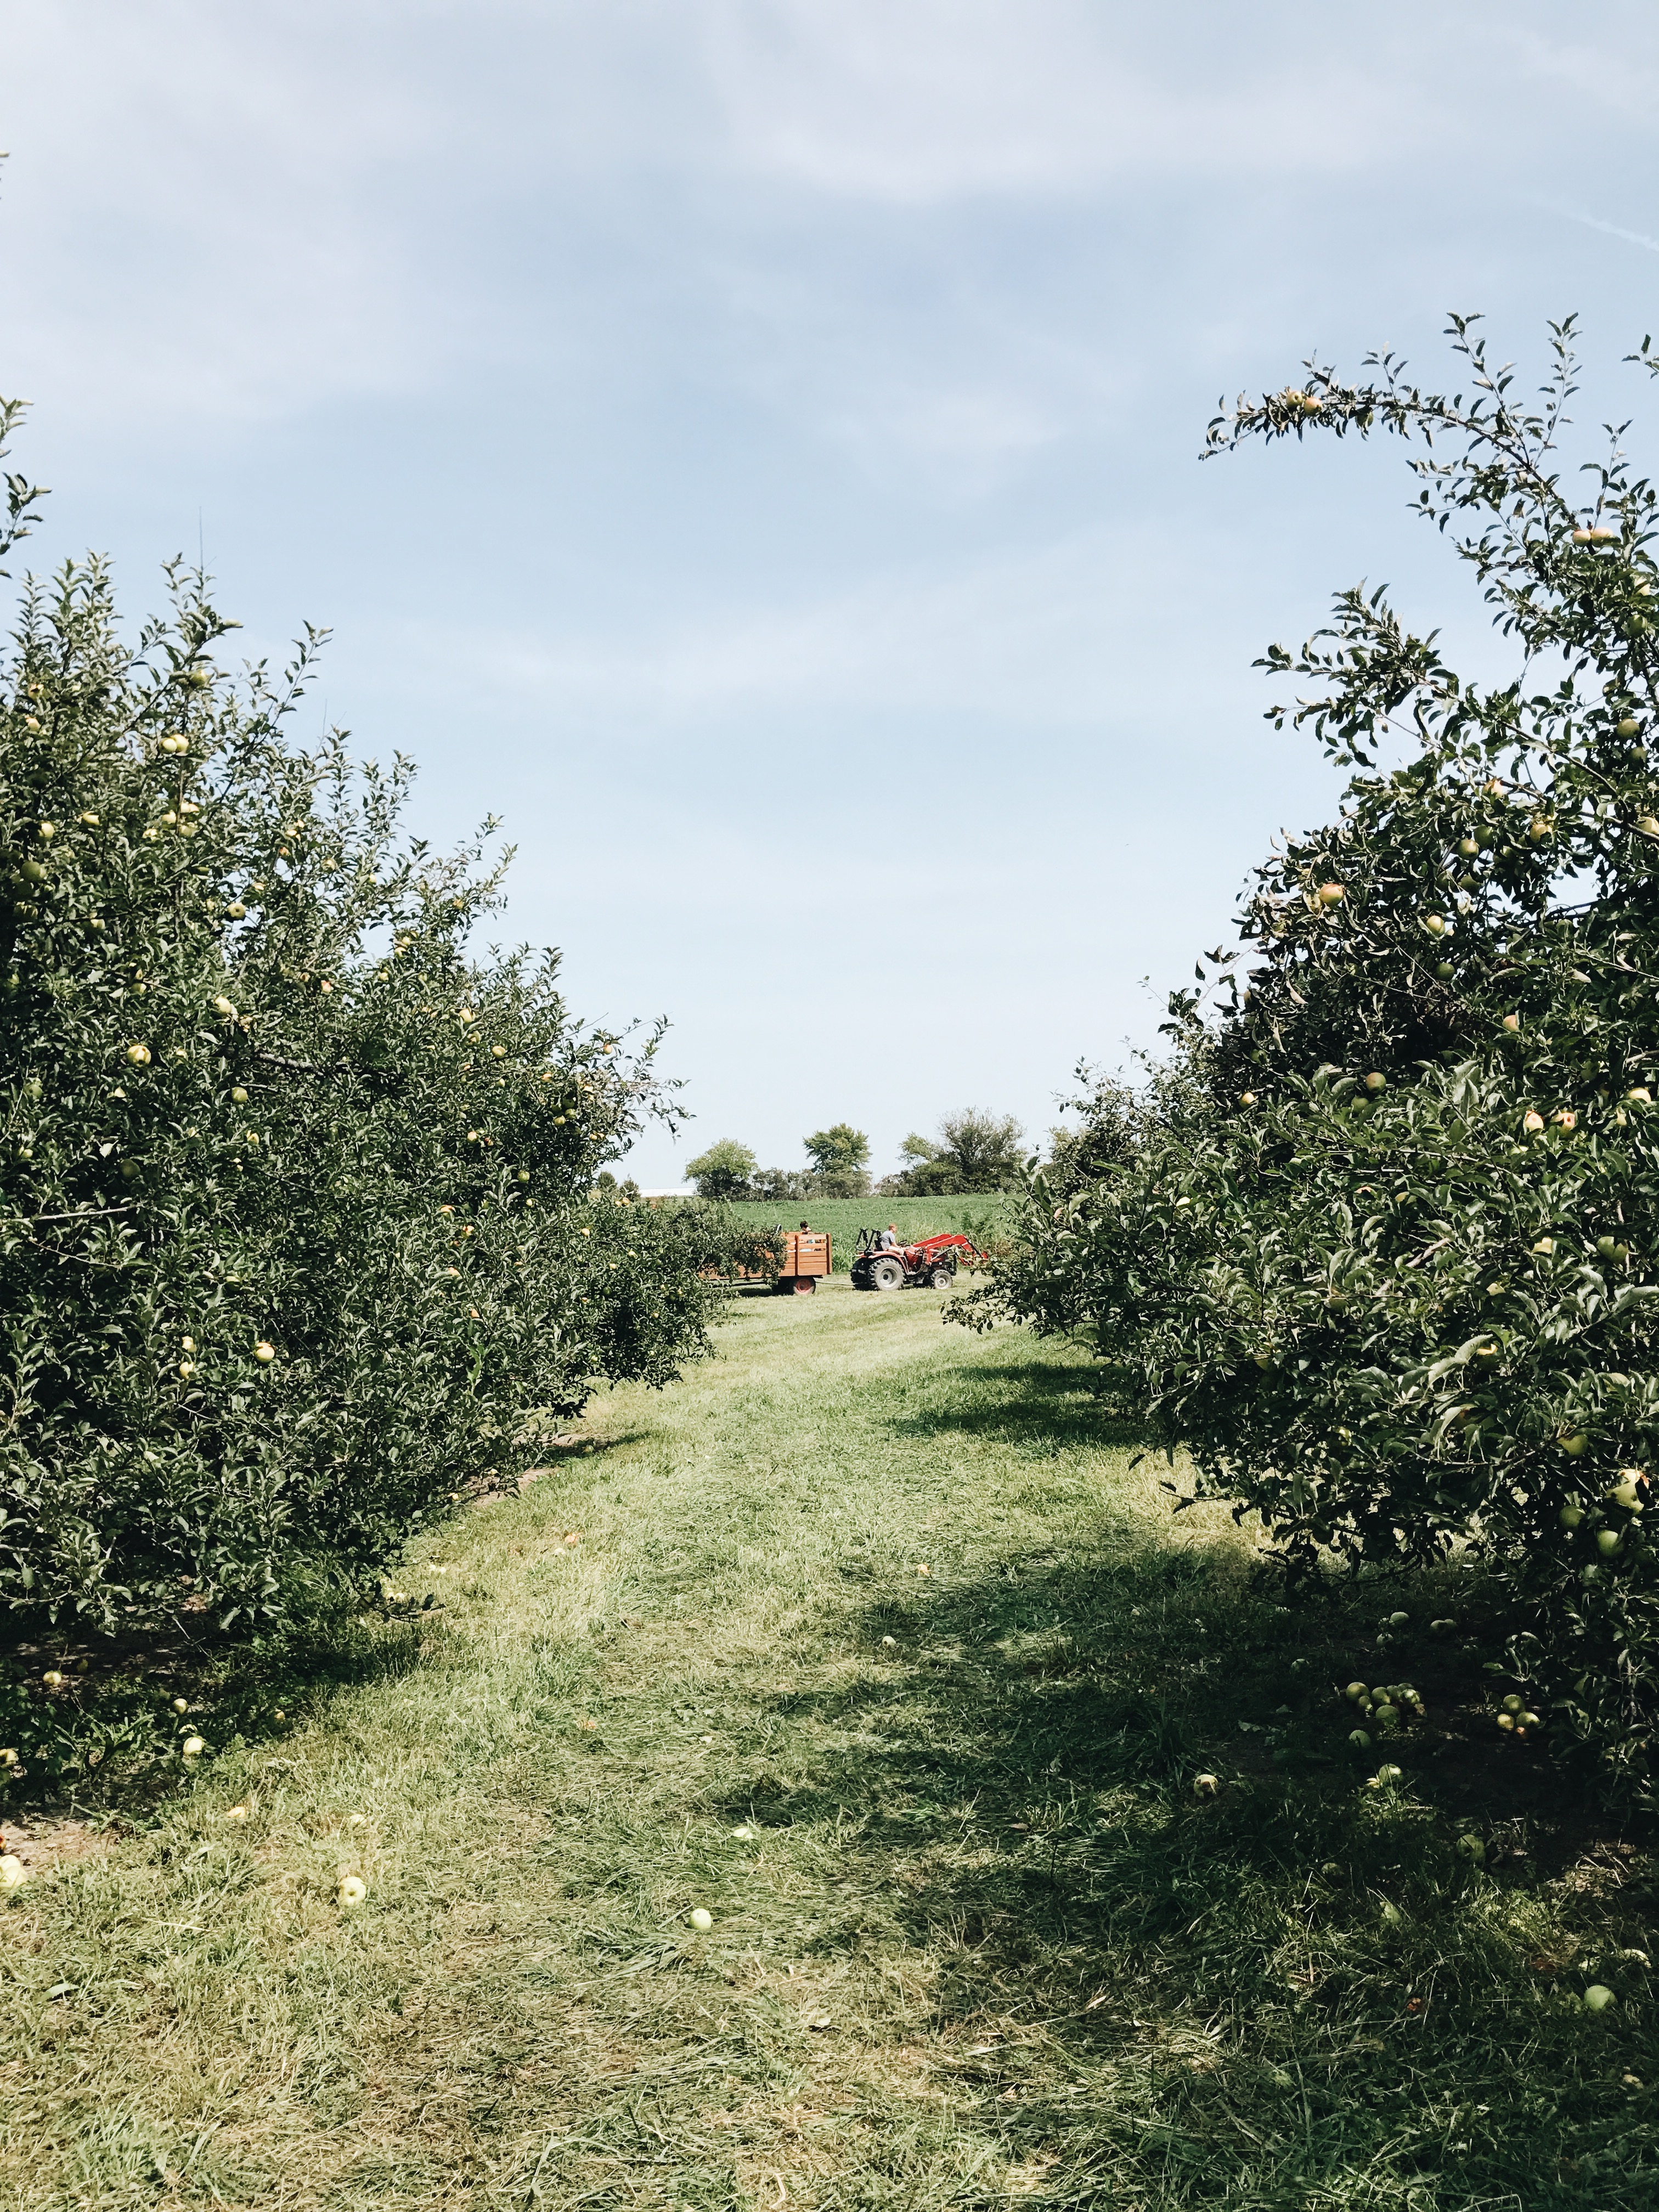 cider hill apple orchard